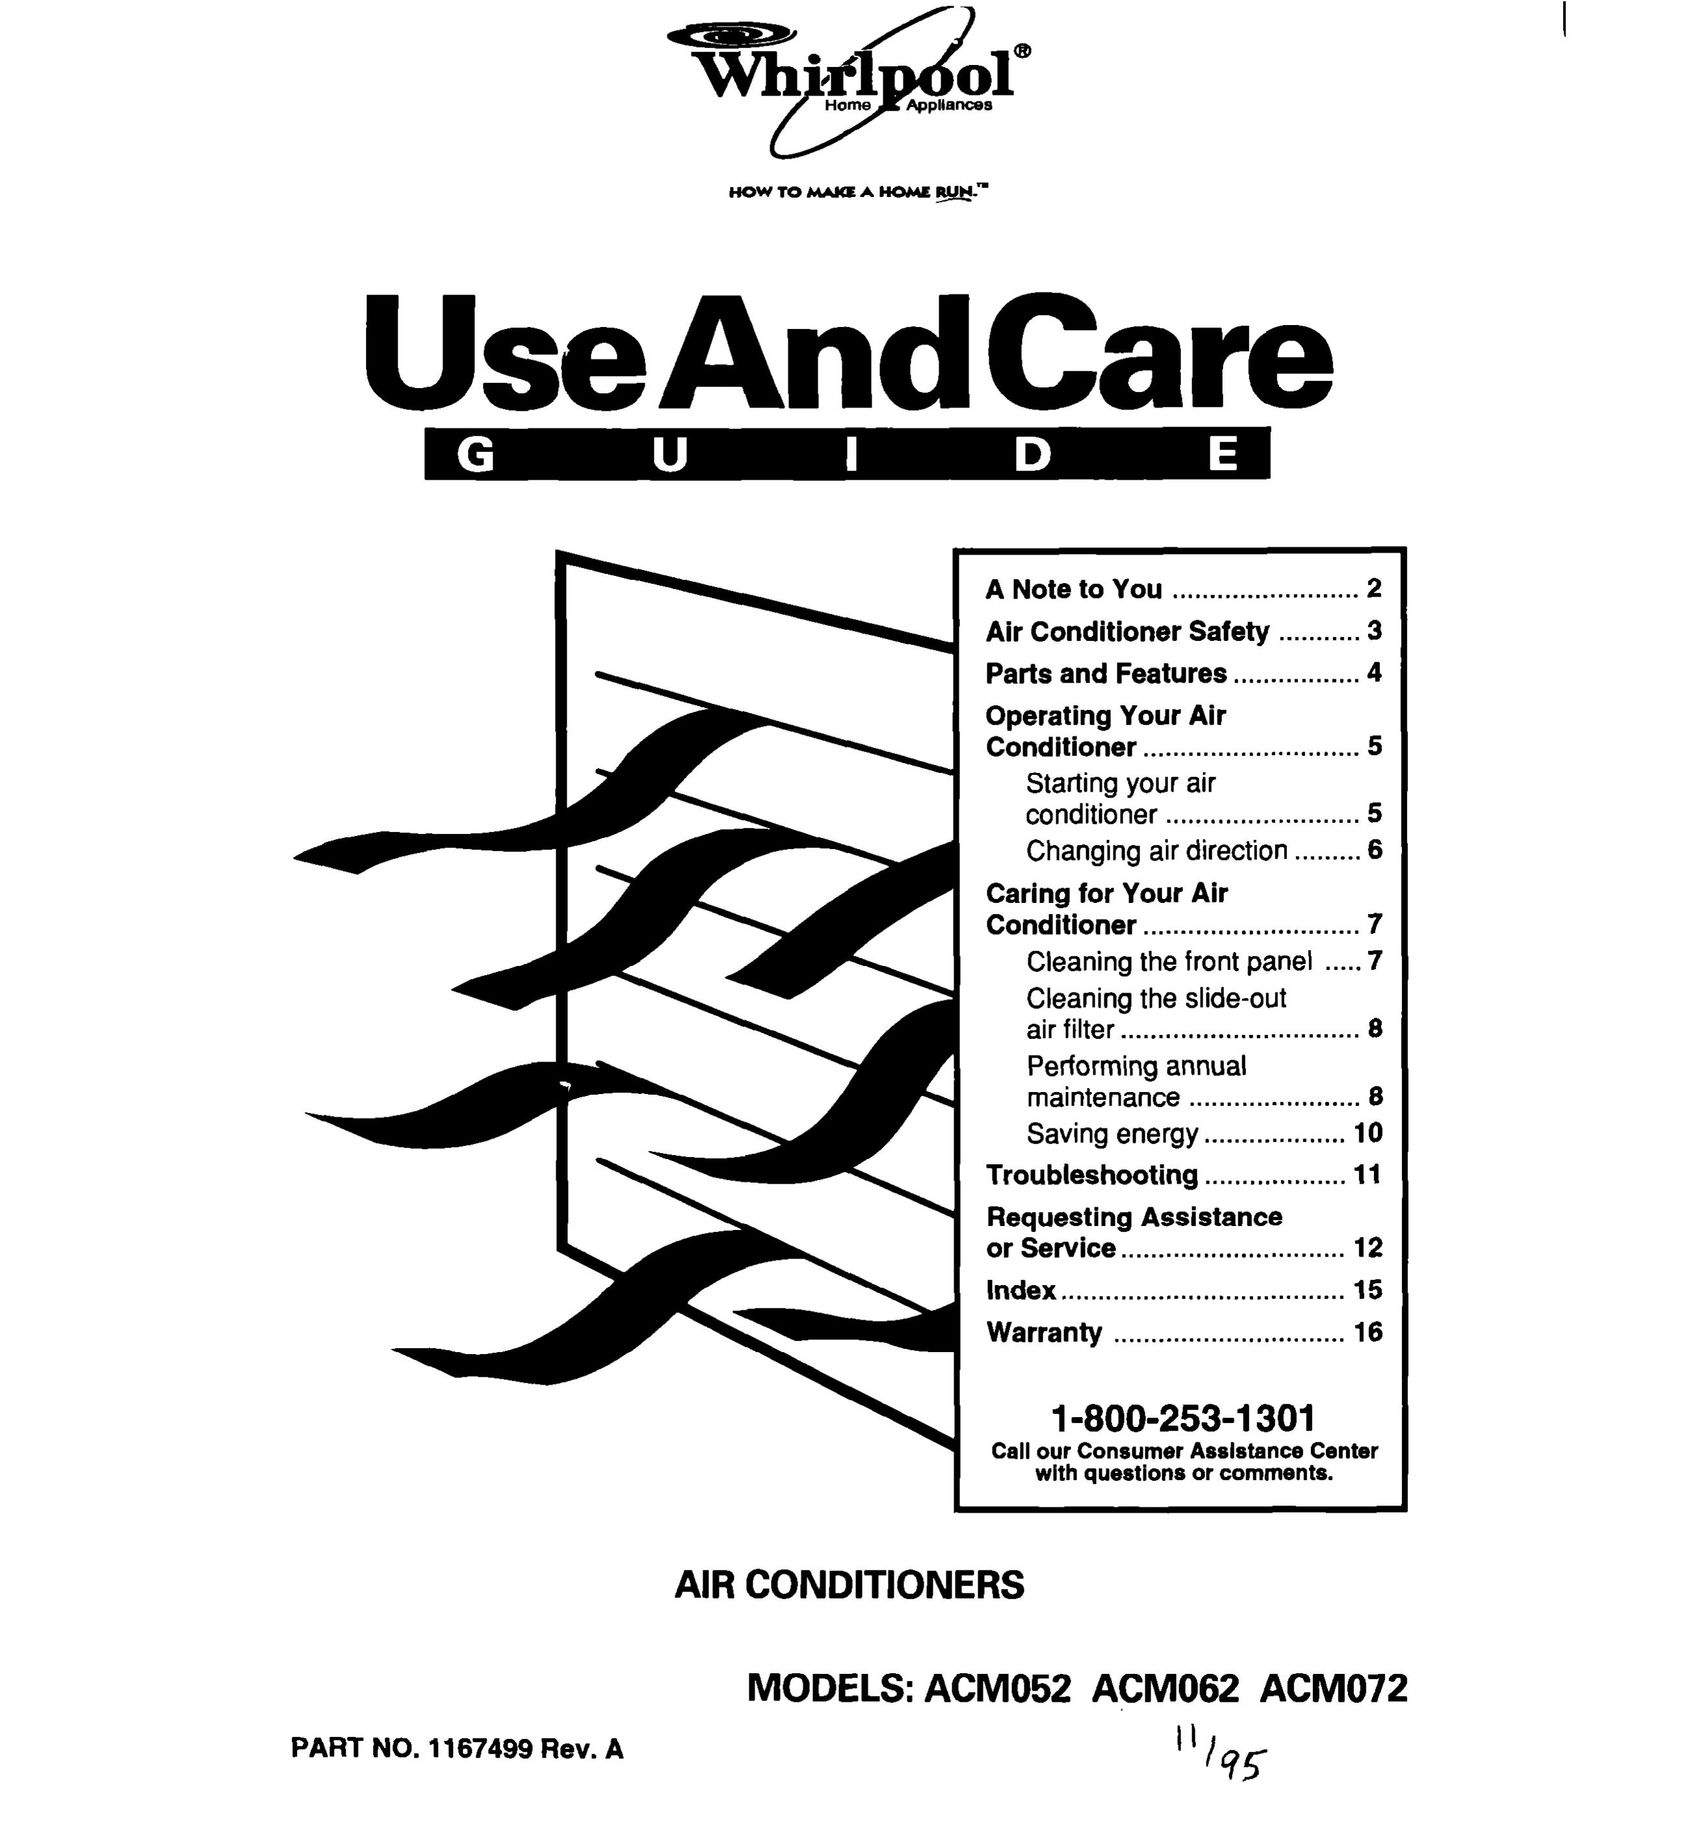 Whirlpool ACM062 Air Conditioner User Manual